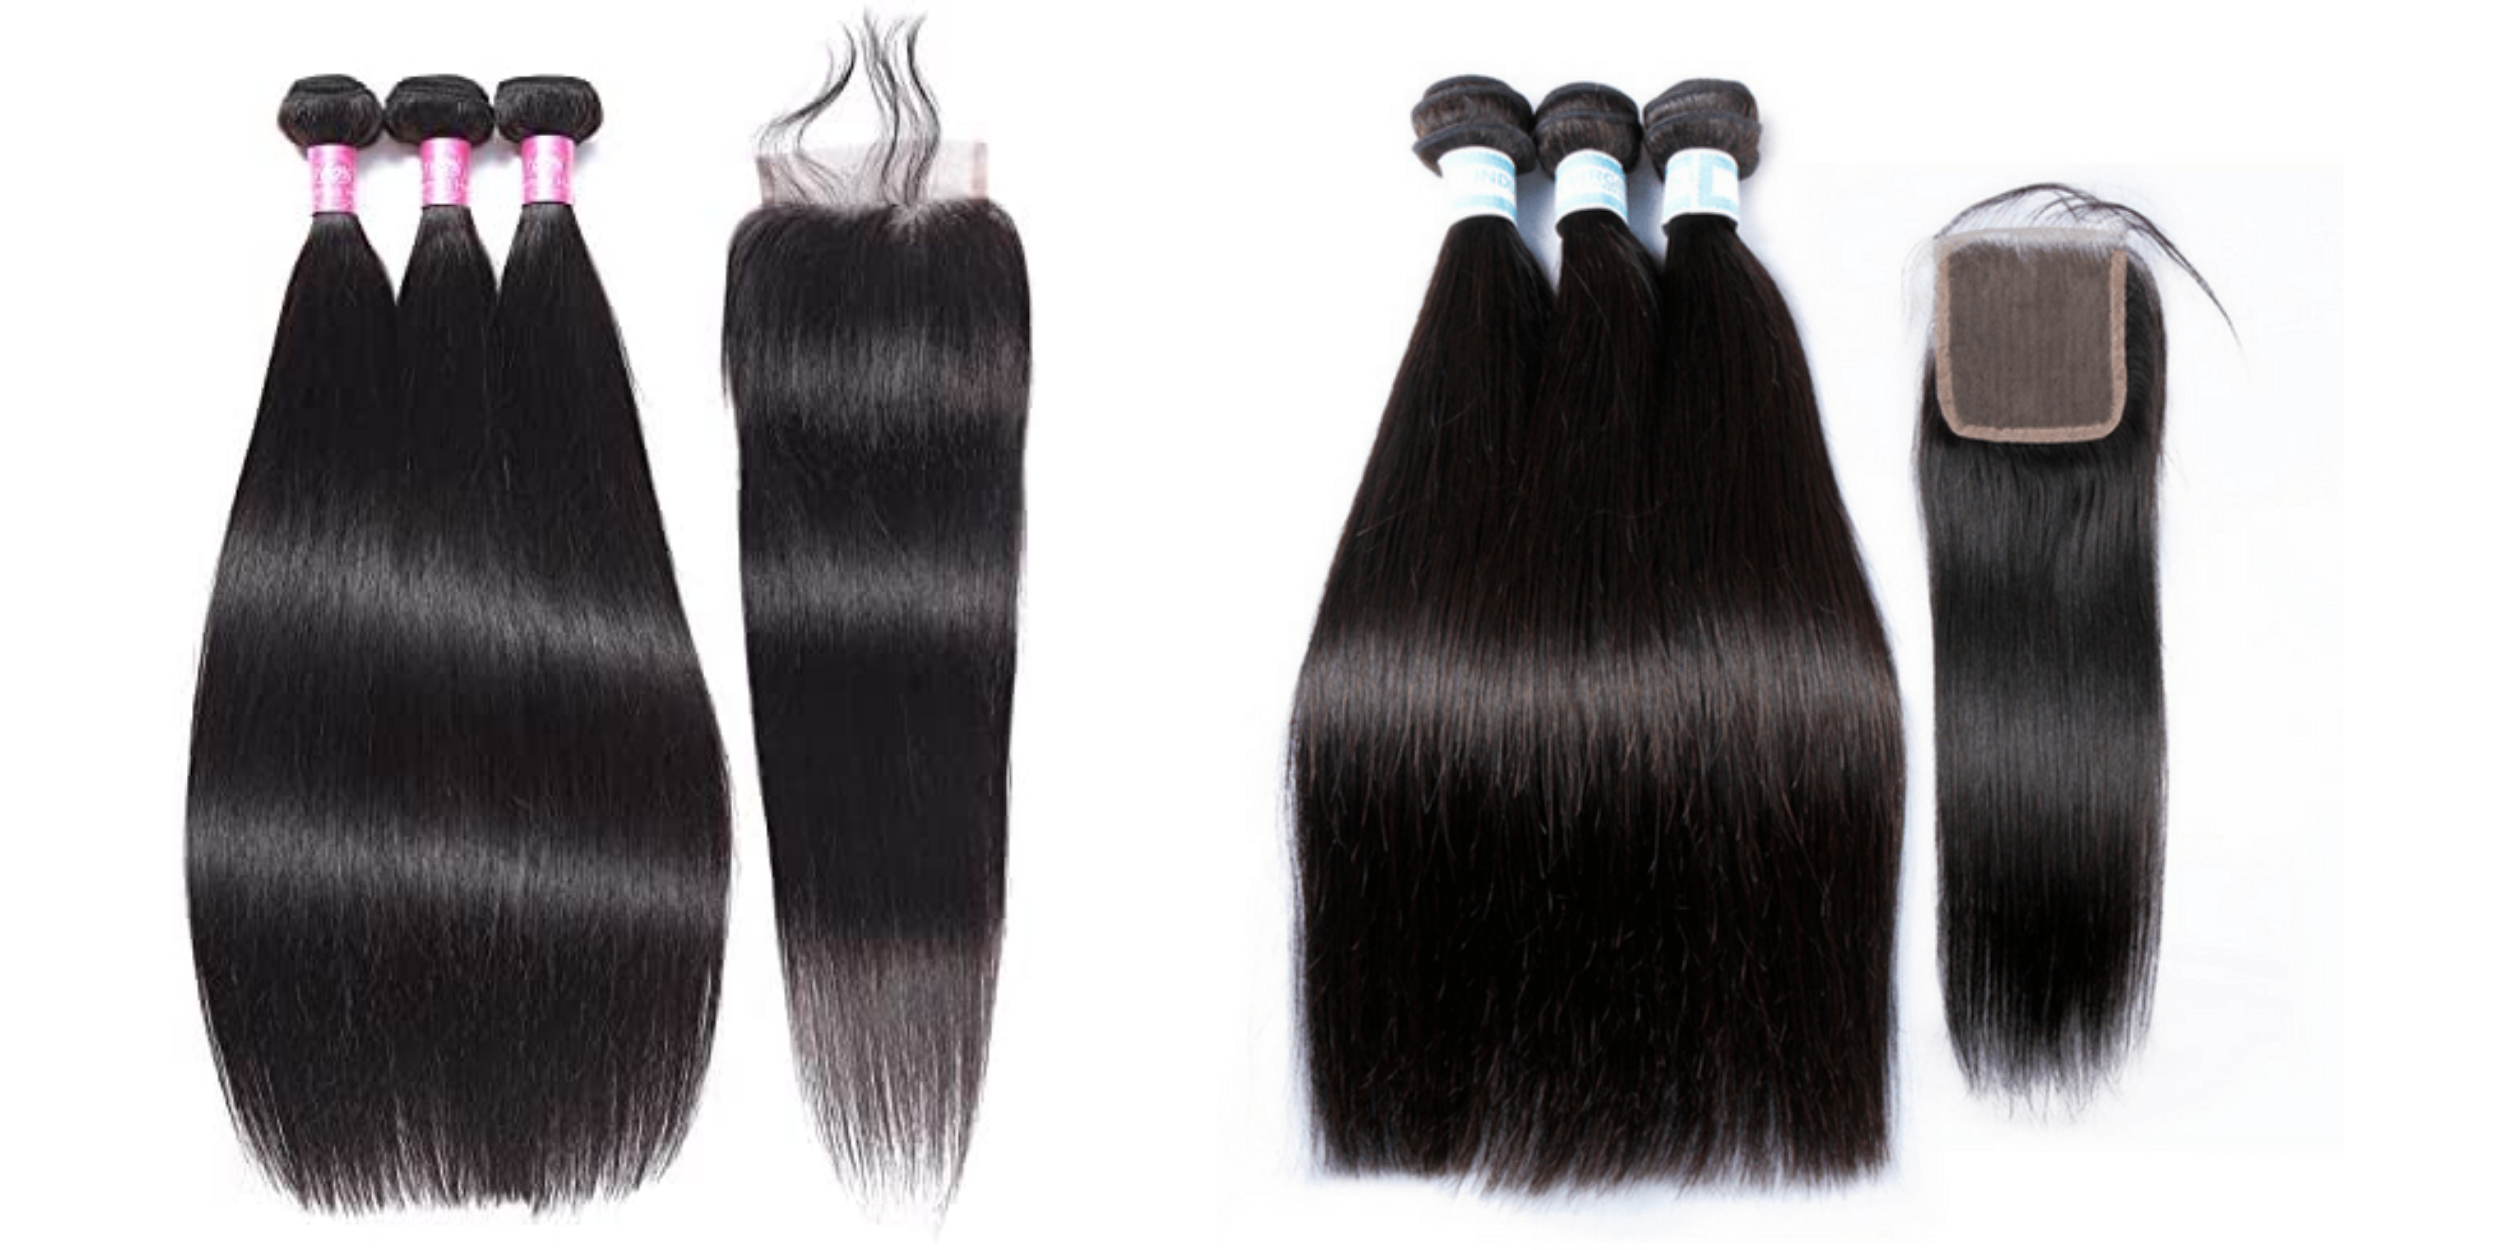 5. Rapid Hair Weave Application - wide 9